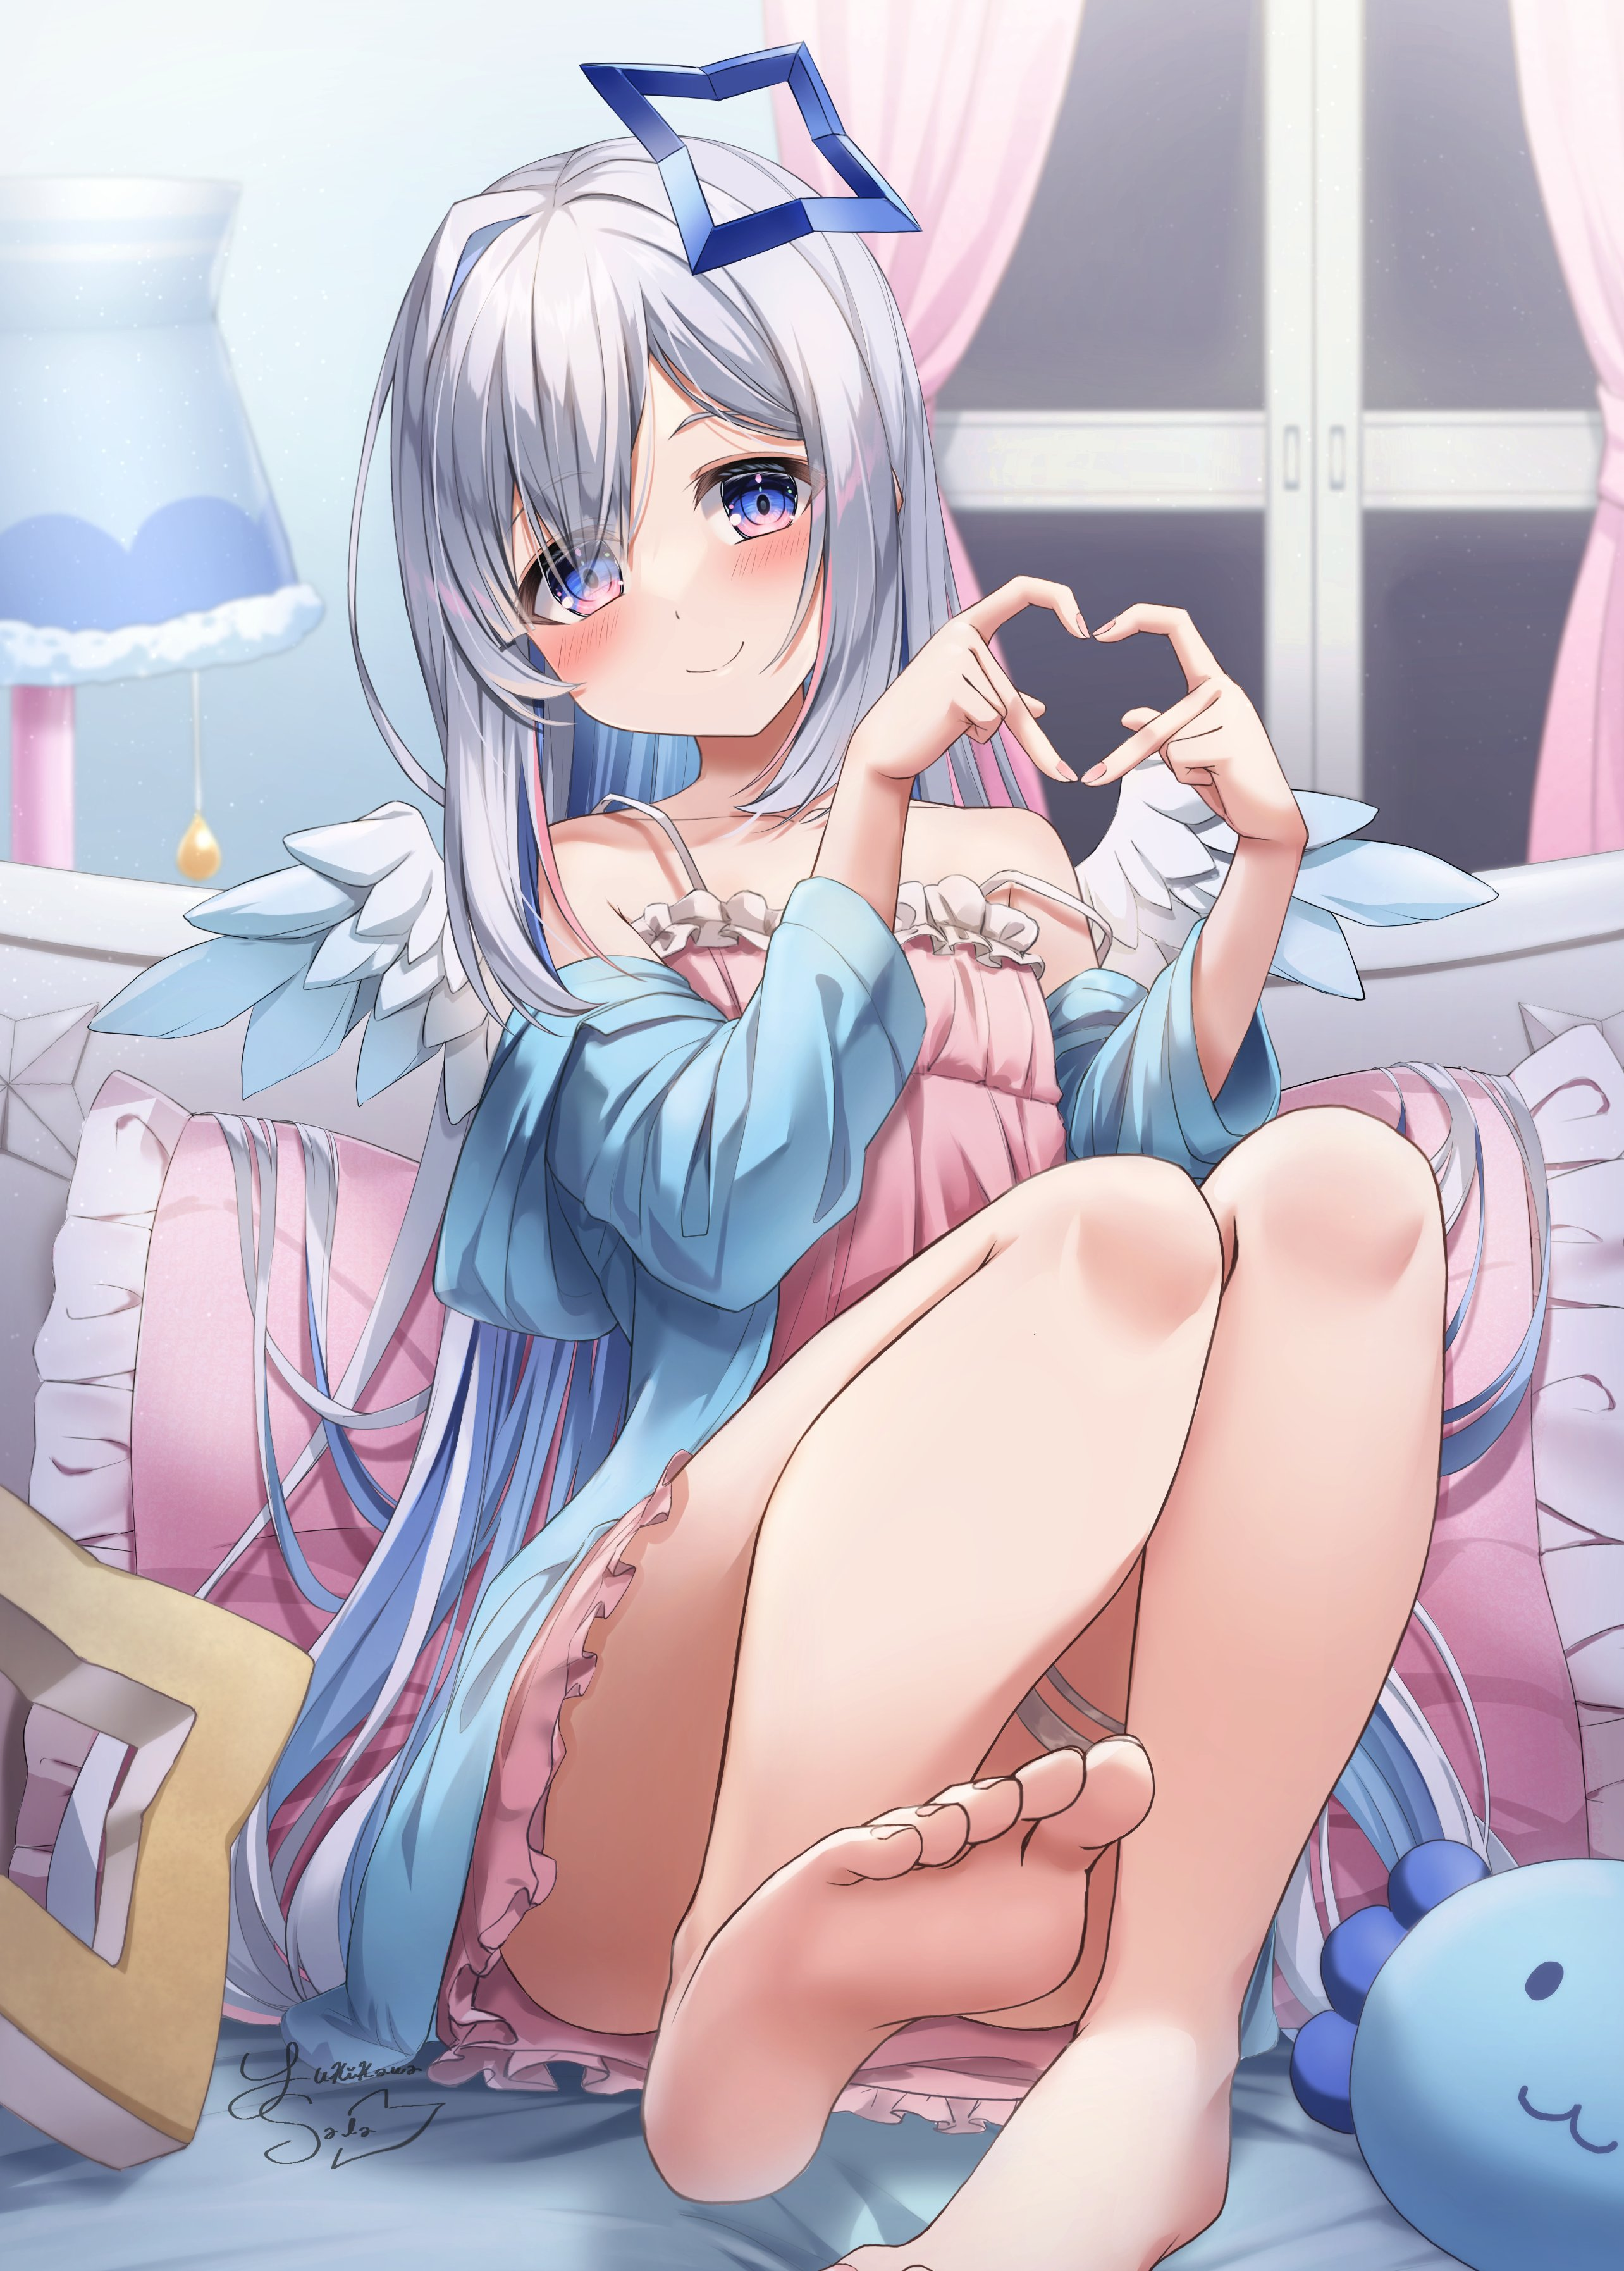 Anime 2568x3590 anime girls Virtual Youtuber Hololive Amane Kanata feet portrait display blue eyes anime girl with wings loli